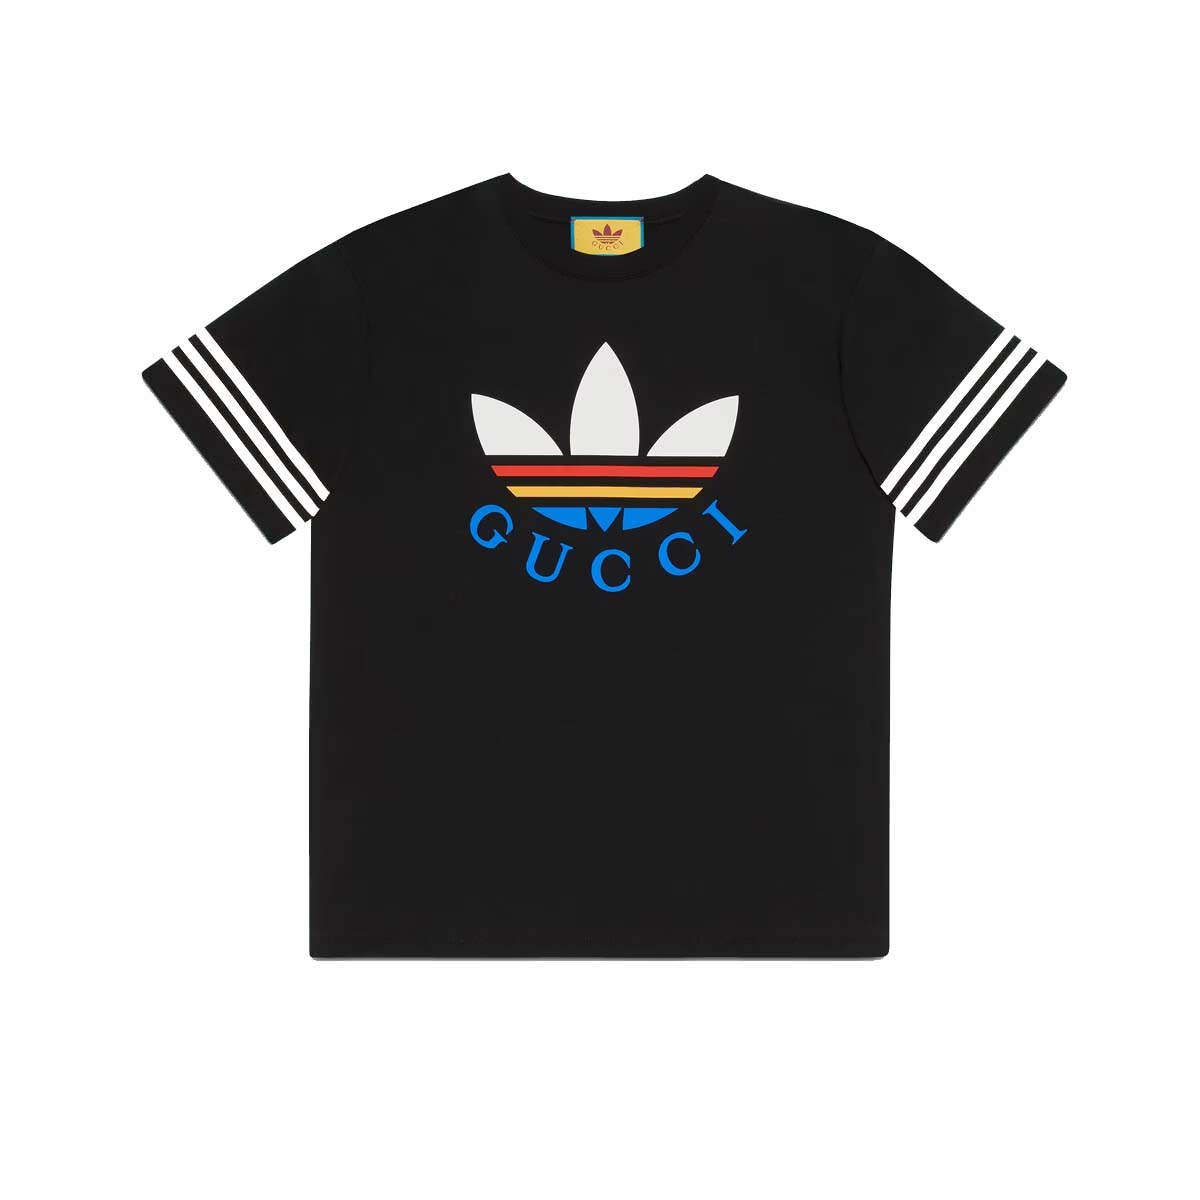 Gucci x adidas Cotton T-shirt Black/Multicolor - FW22 メンズ - JP